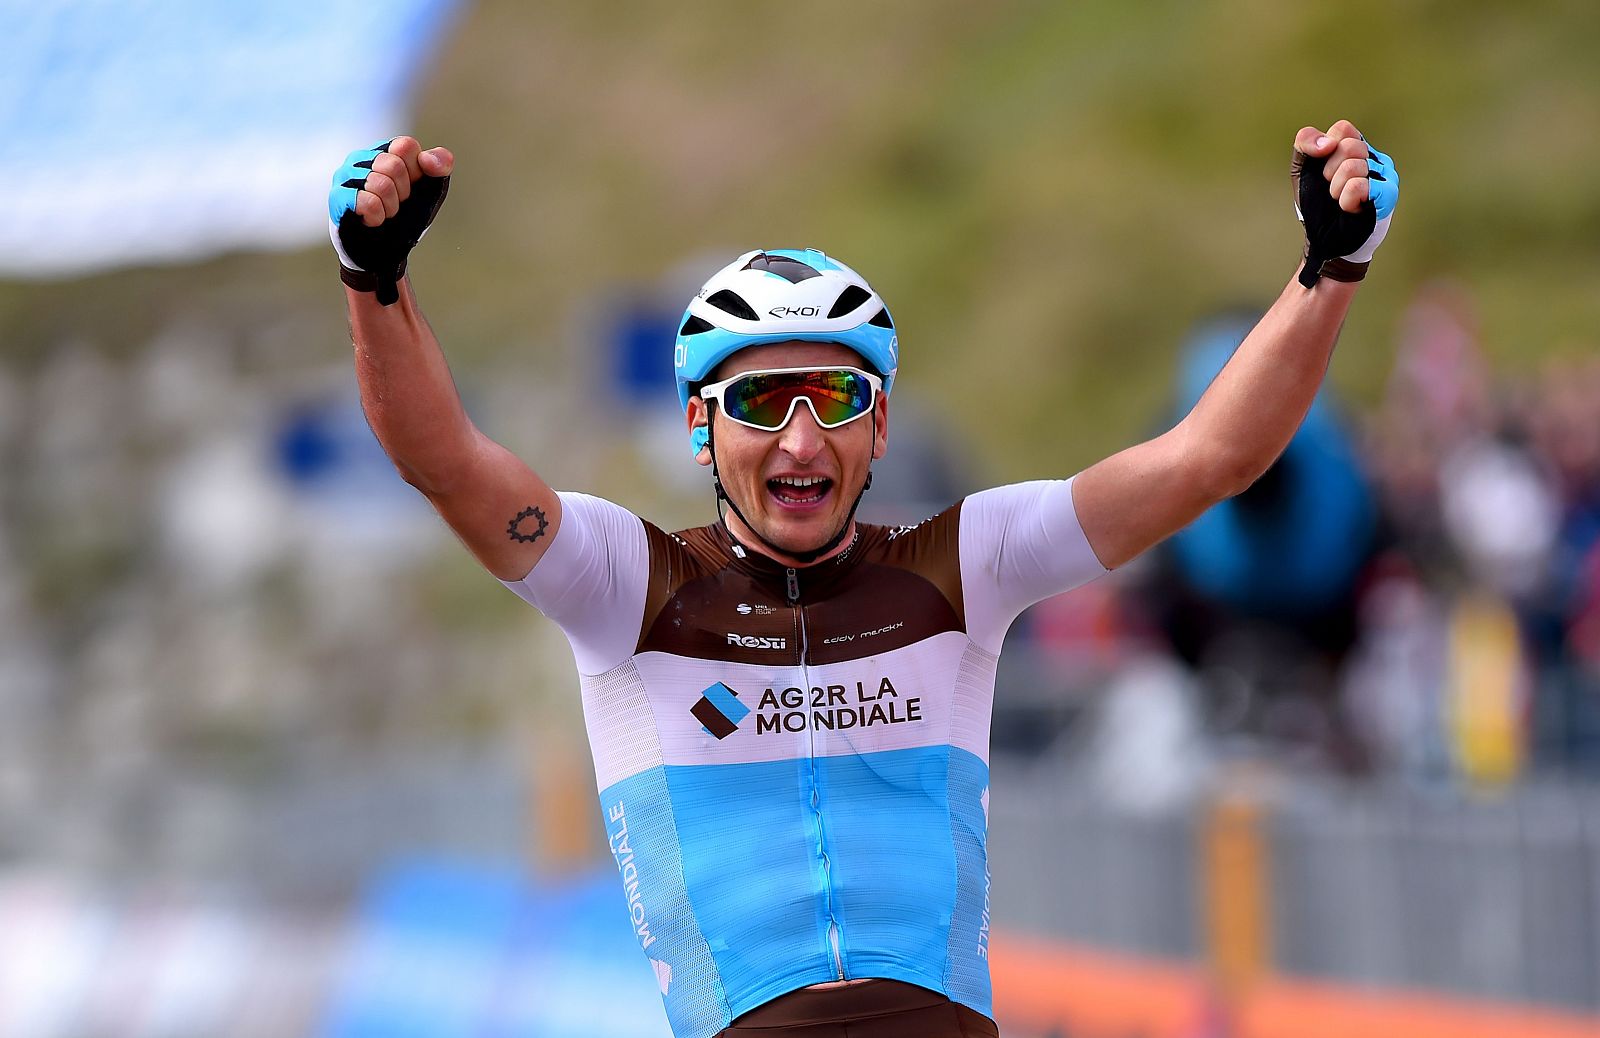 El francés Nans Peters (Ag2r) se ha impuesto en la decimoséptima etapa del Giro de Italia 2019.